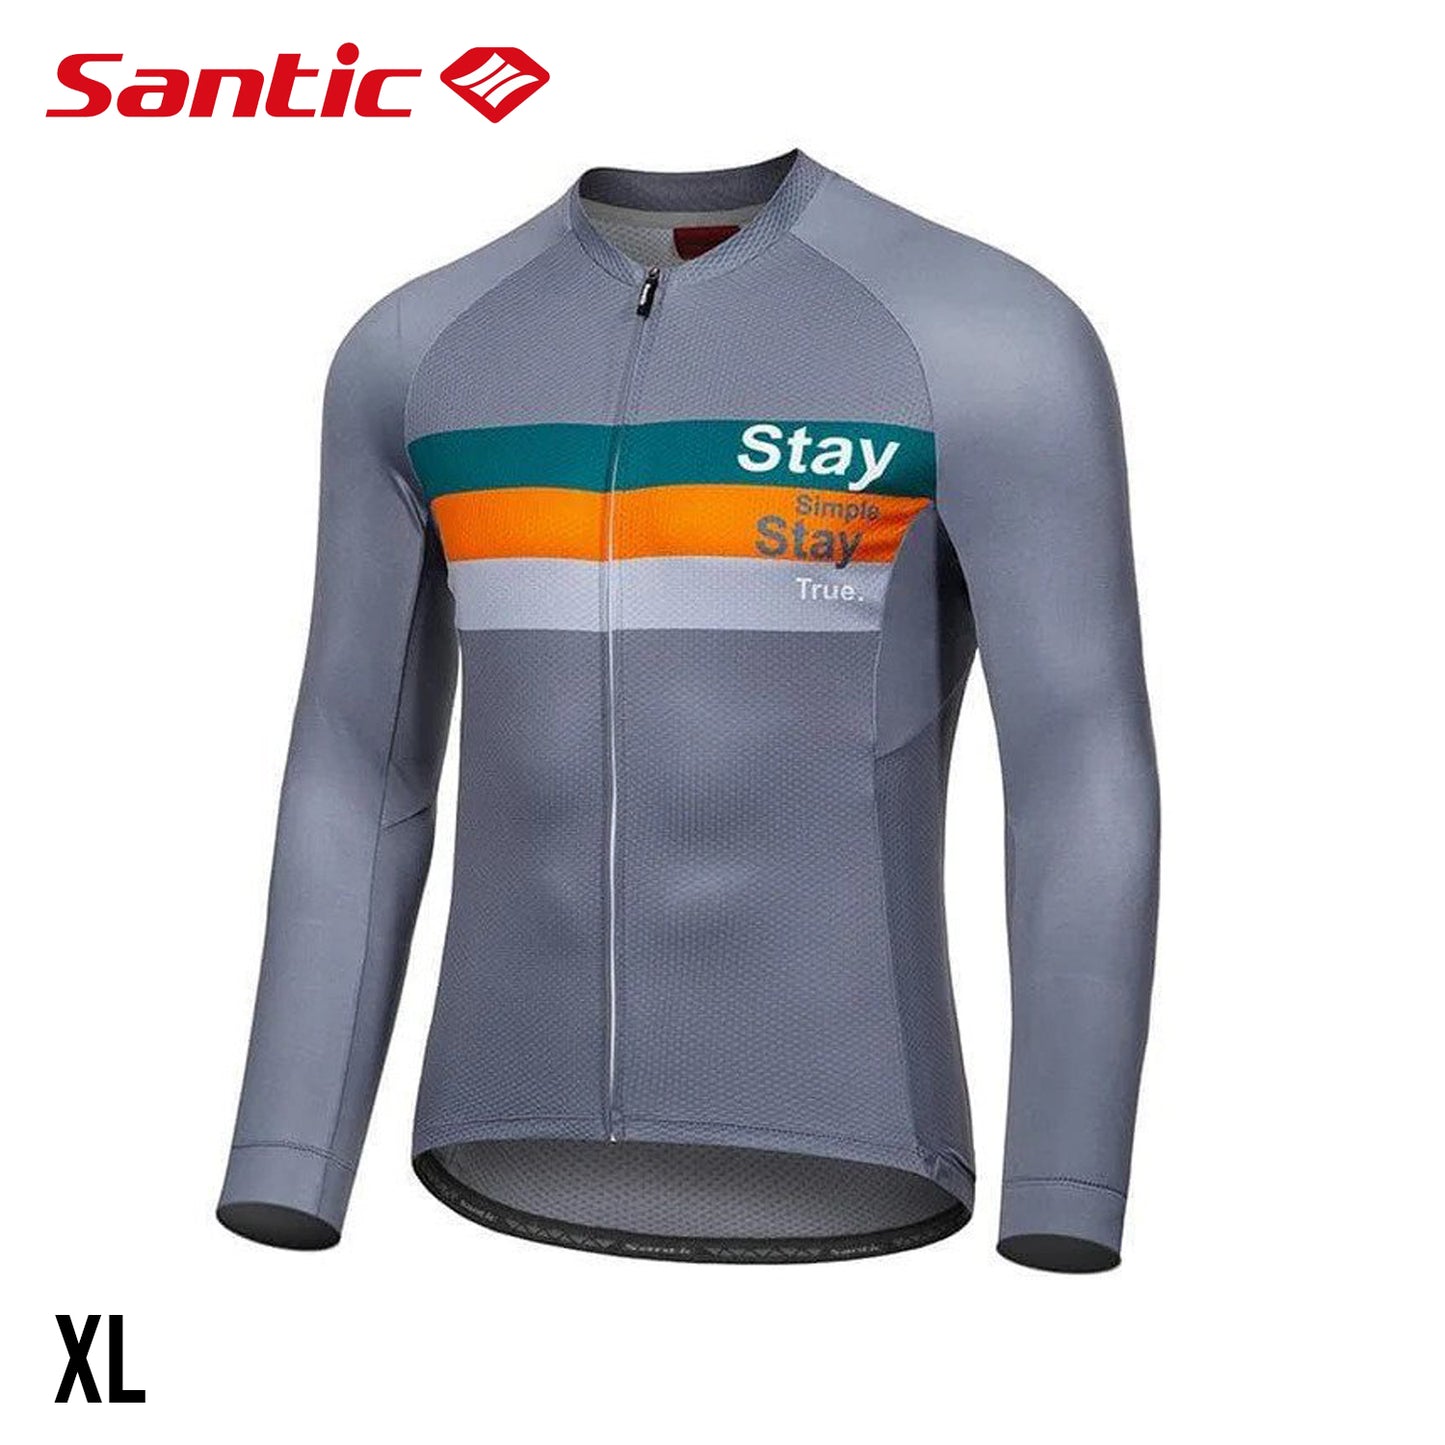 Santic Siyo Men's Long Sleeve Spring Summer Jersey - Gray